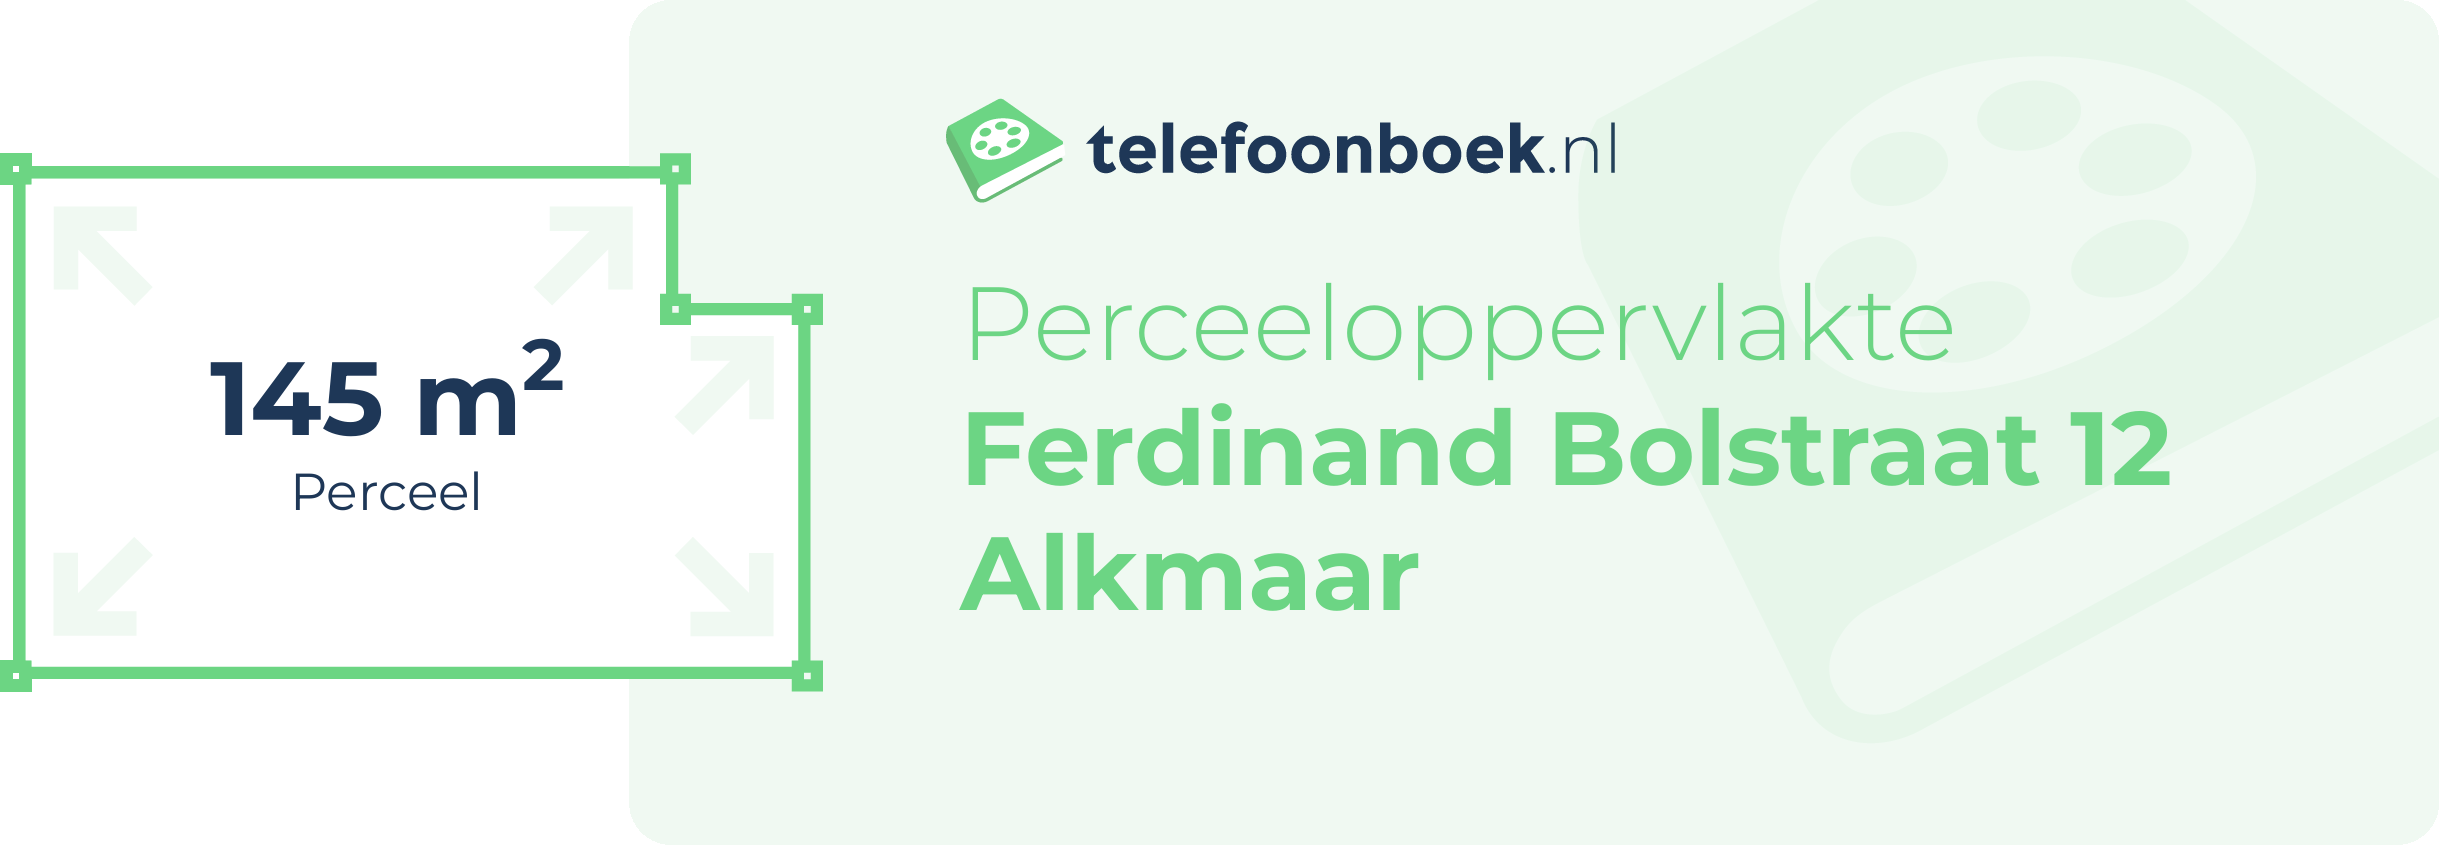 Perceeloppervlakte Ferdinand Bolstraat 12 Alkmaar